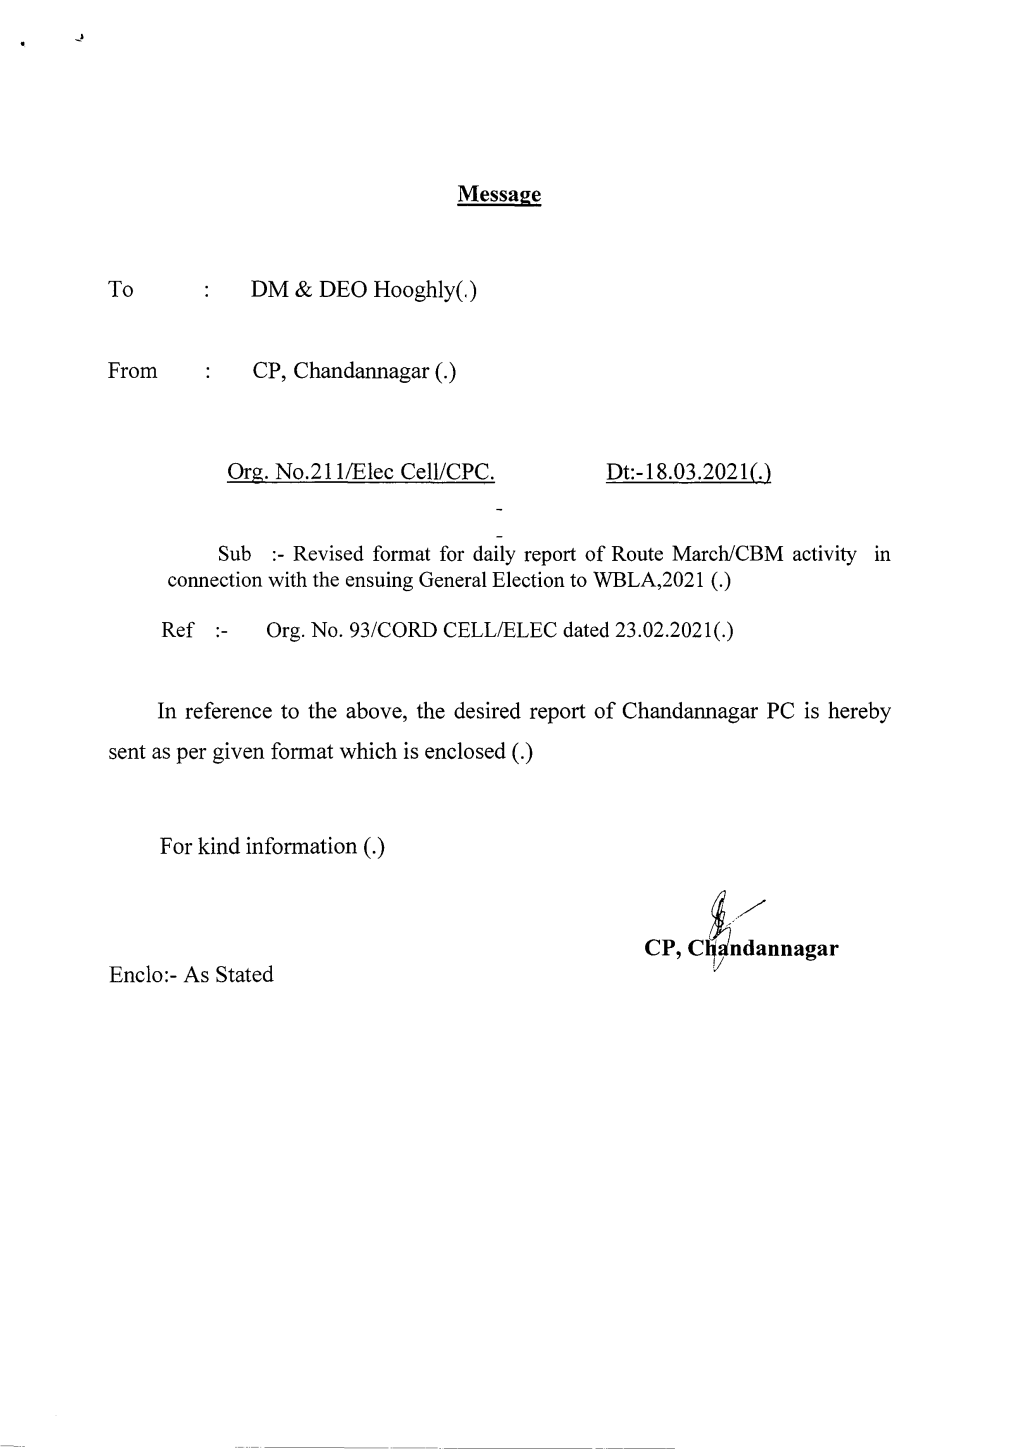 Message to DM & DEO Hoogh1y() from CP, Chandannagar (.) Org